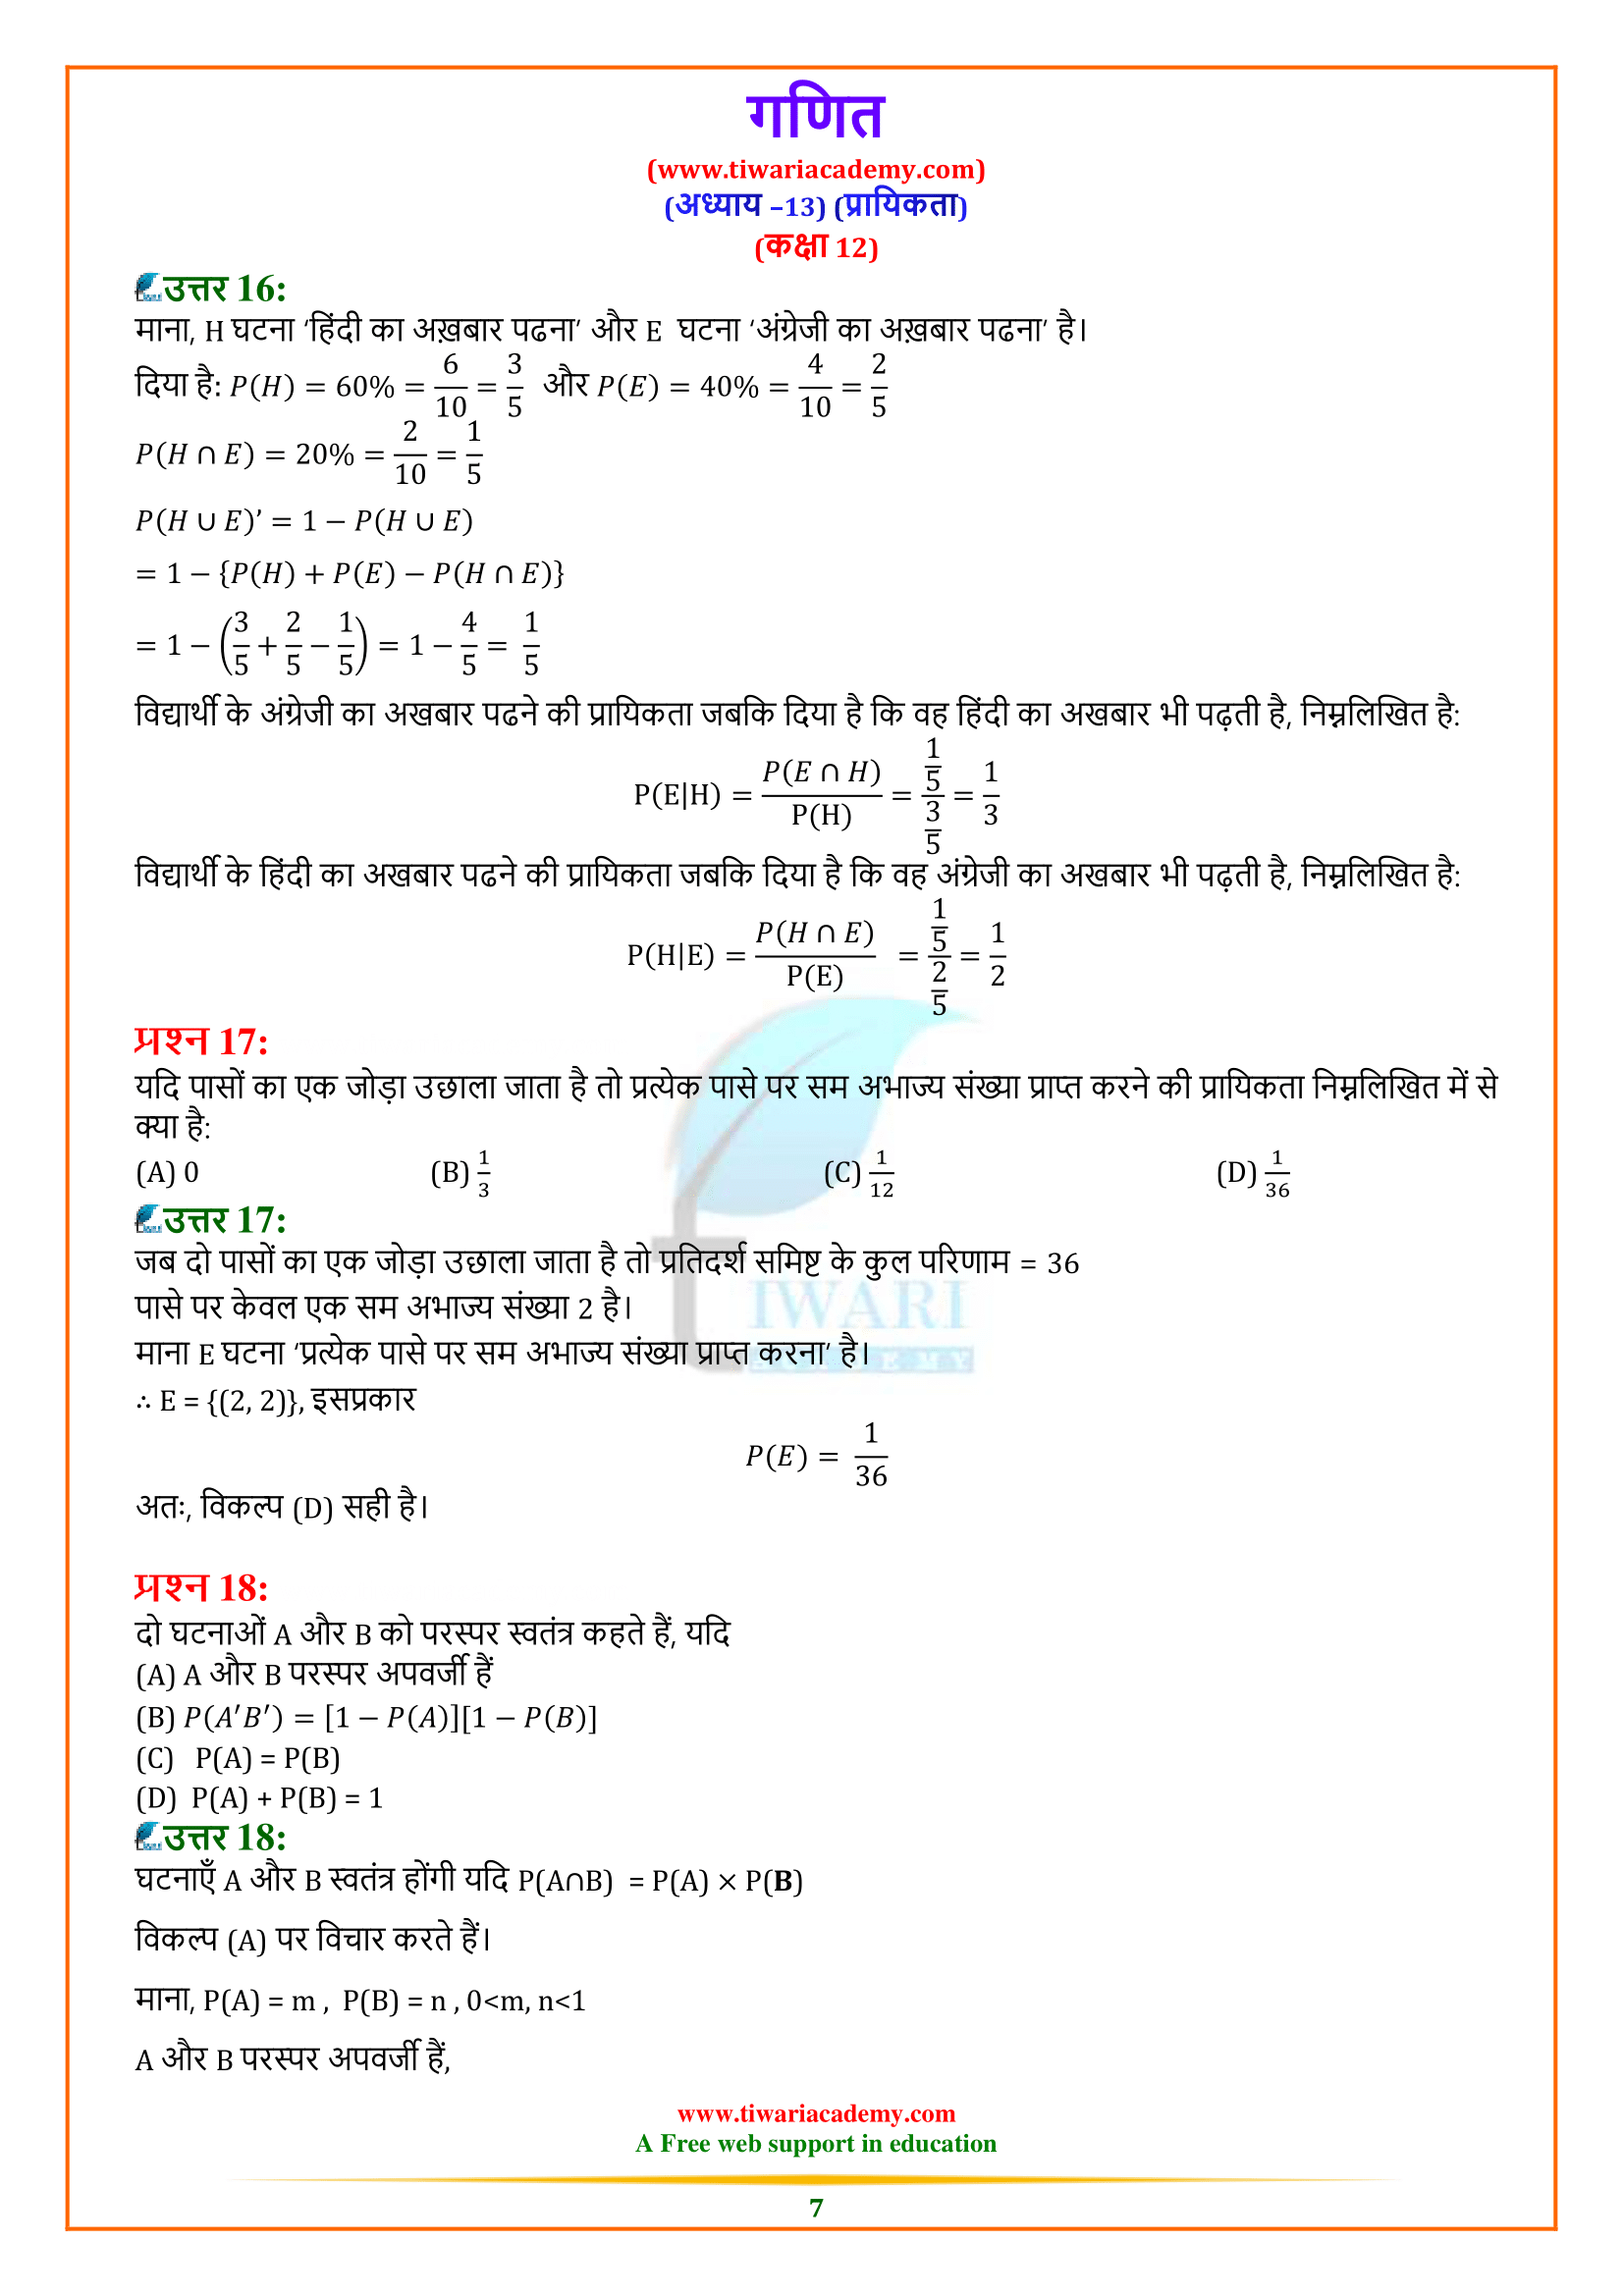 Hindi Medium Class 12 Maths Chapter 13 Exercise 13.2